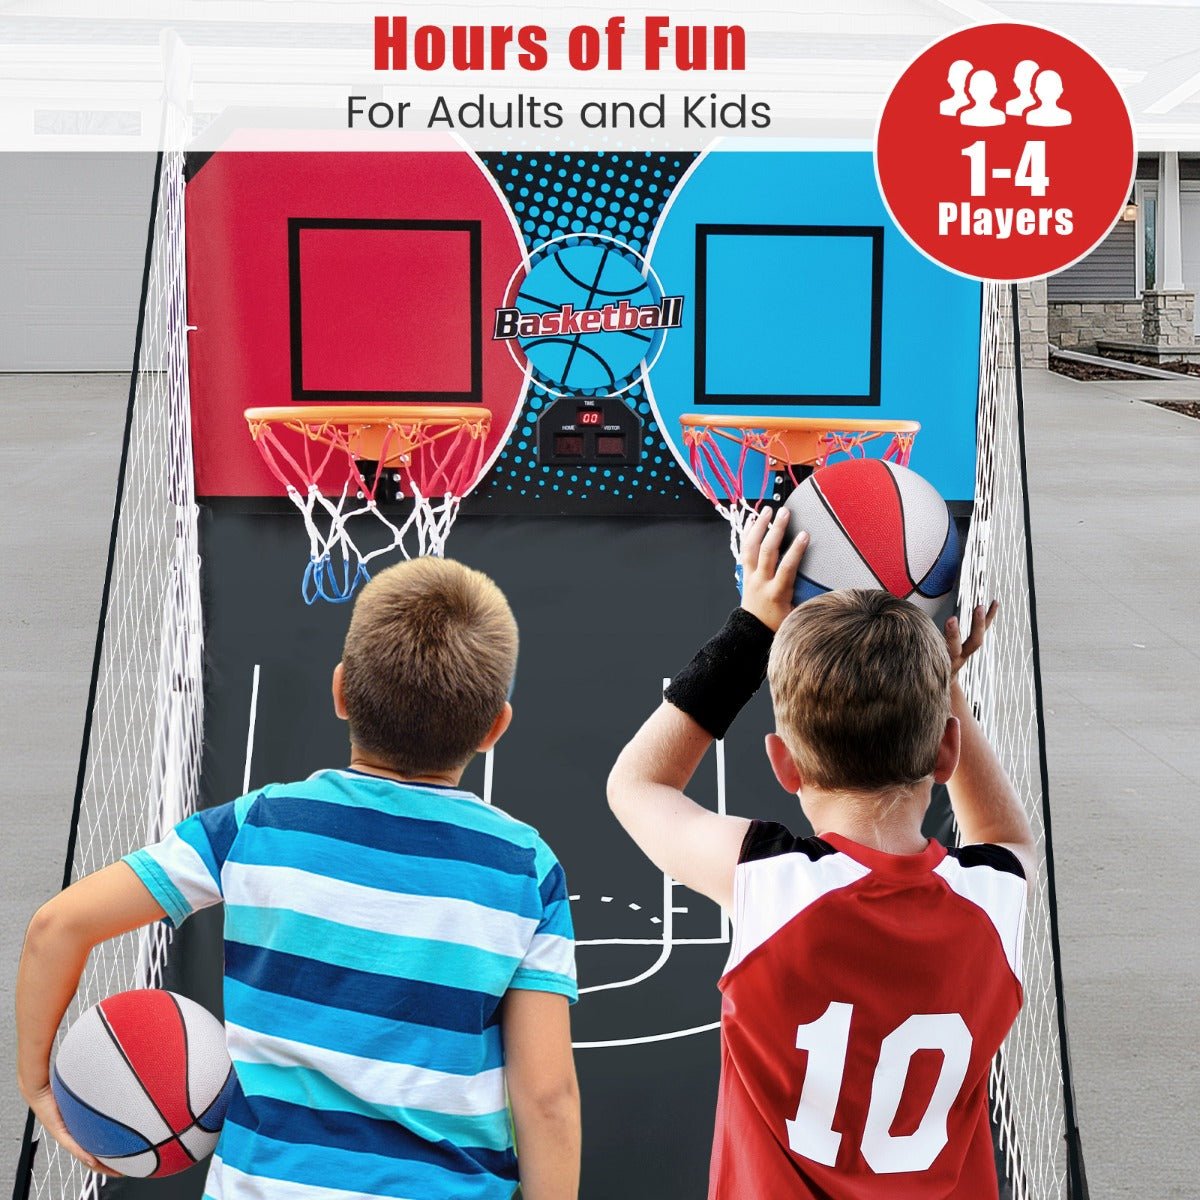 Arcade-Style Dual Basketball Hoops